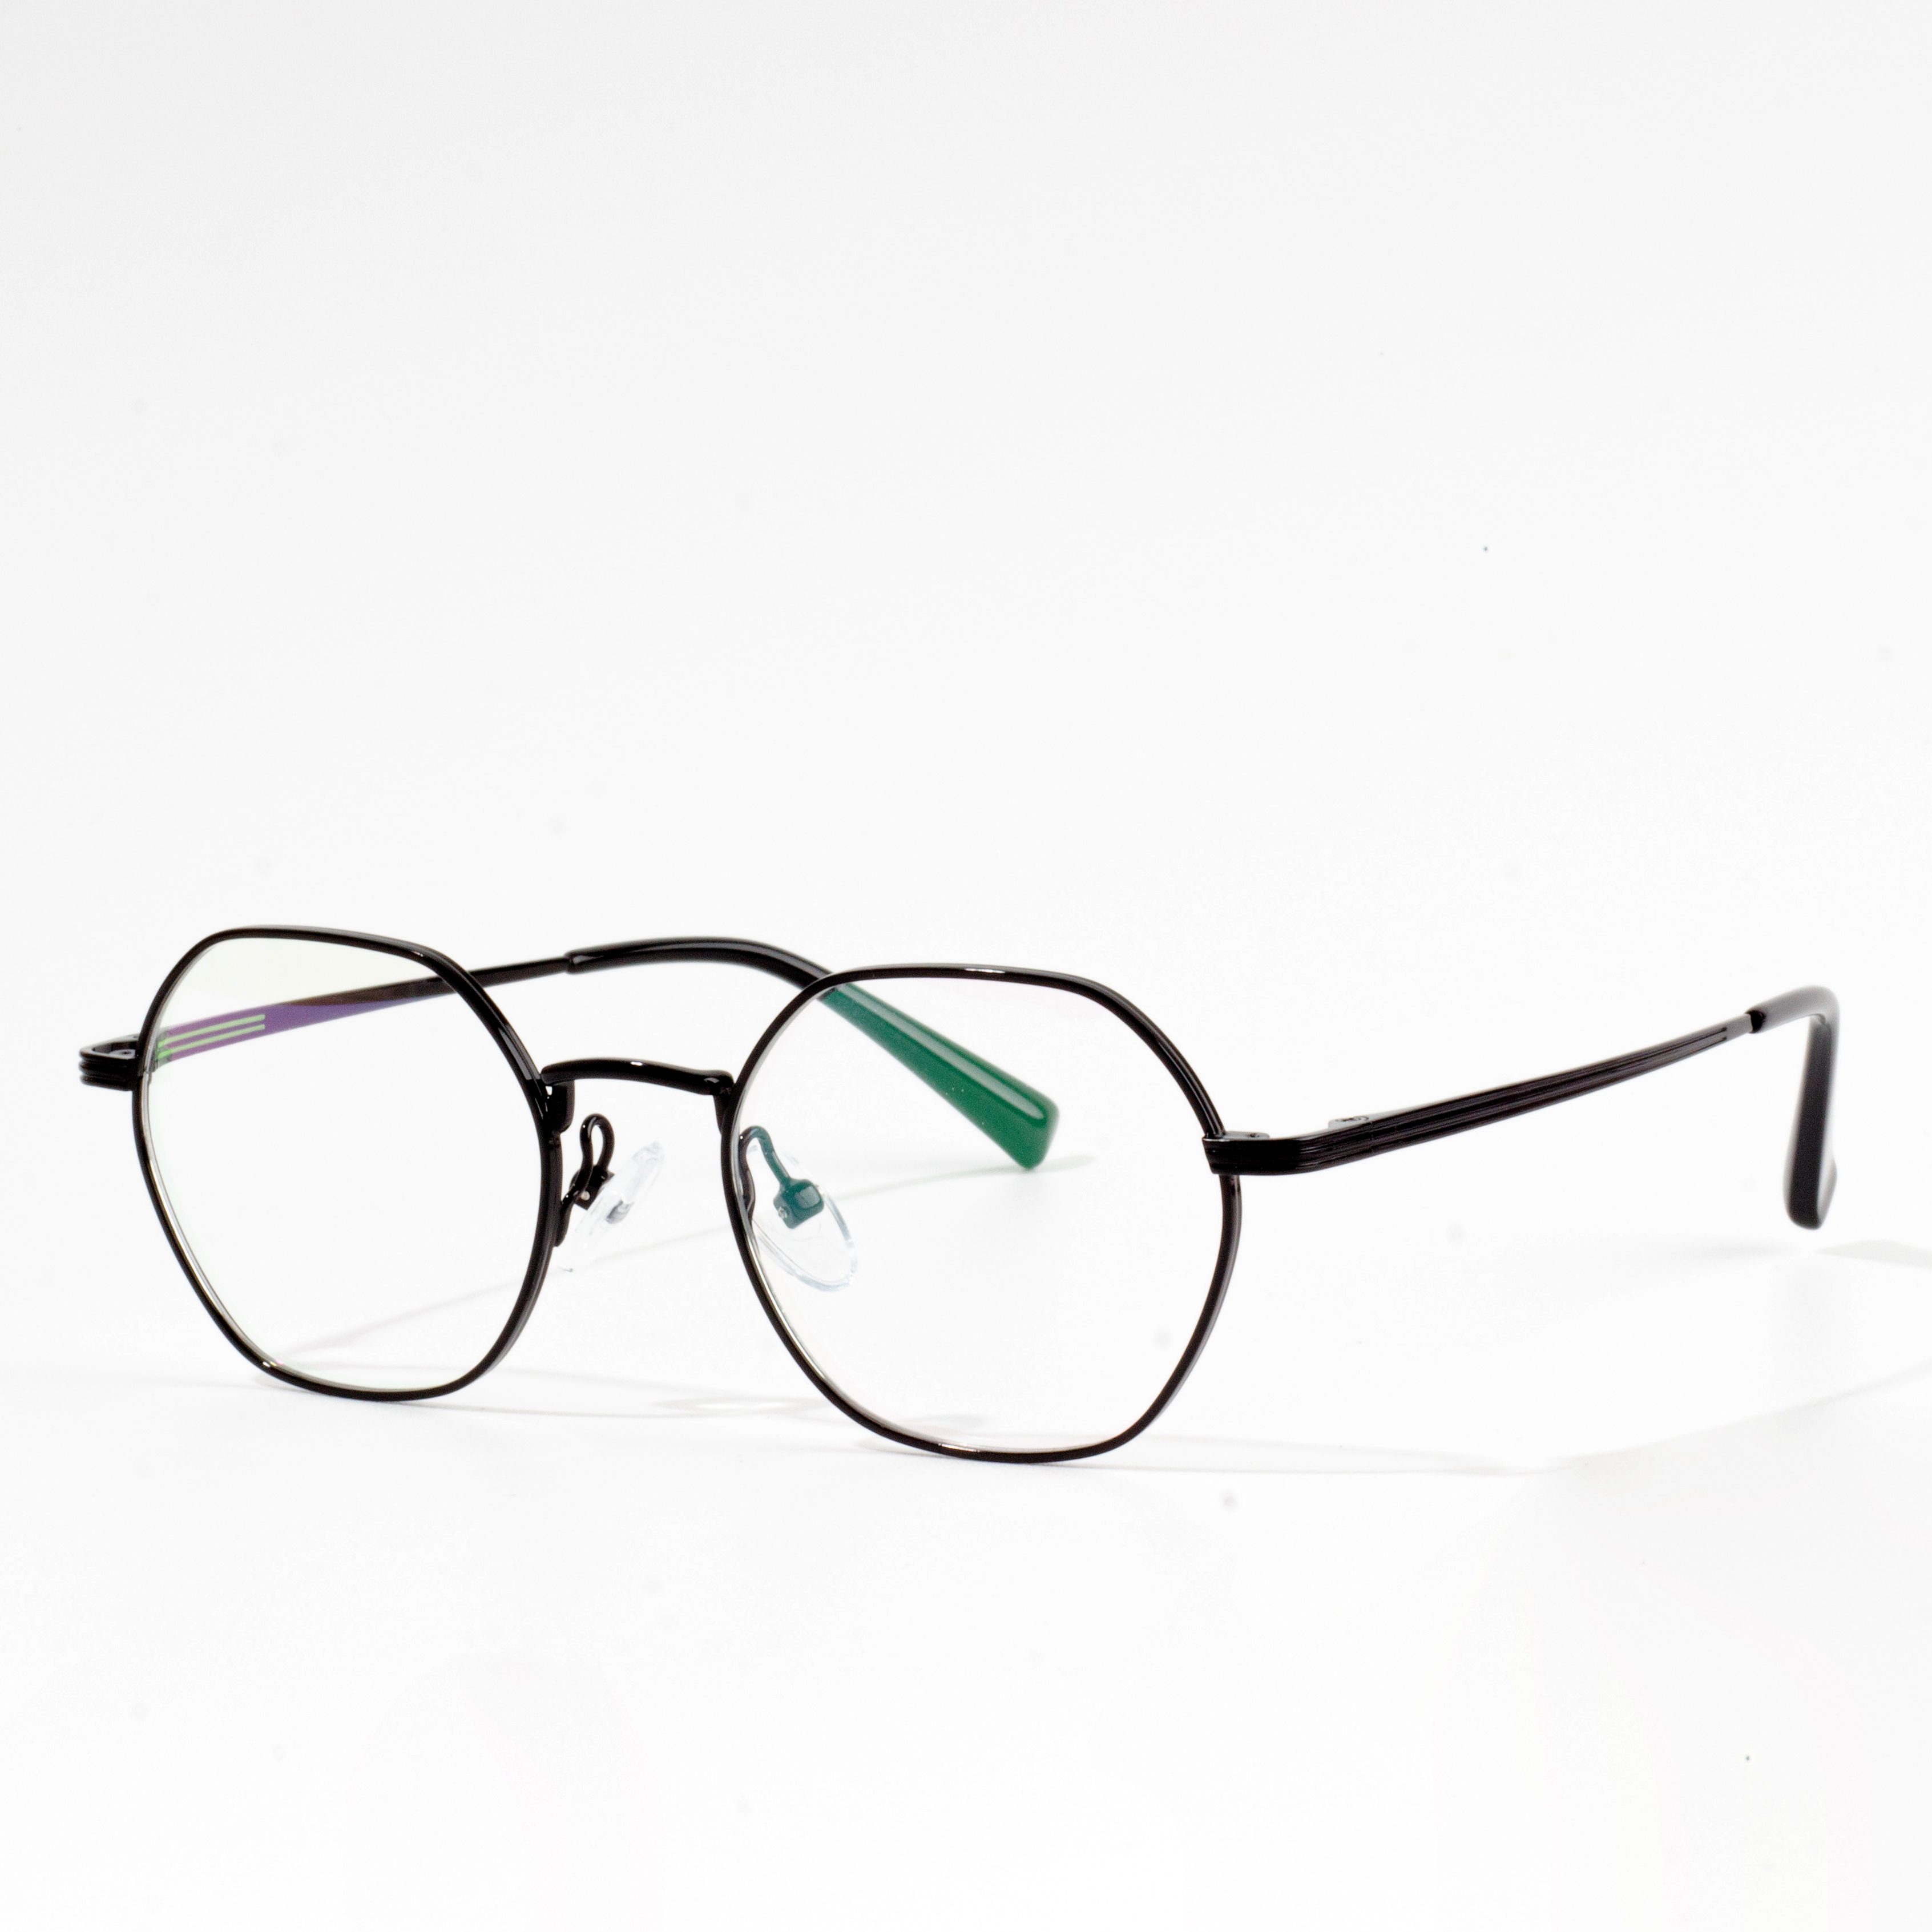 metal eyeglass frames